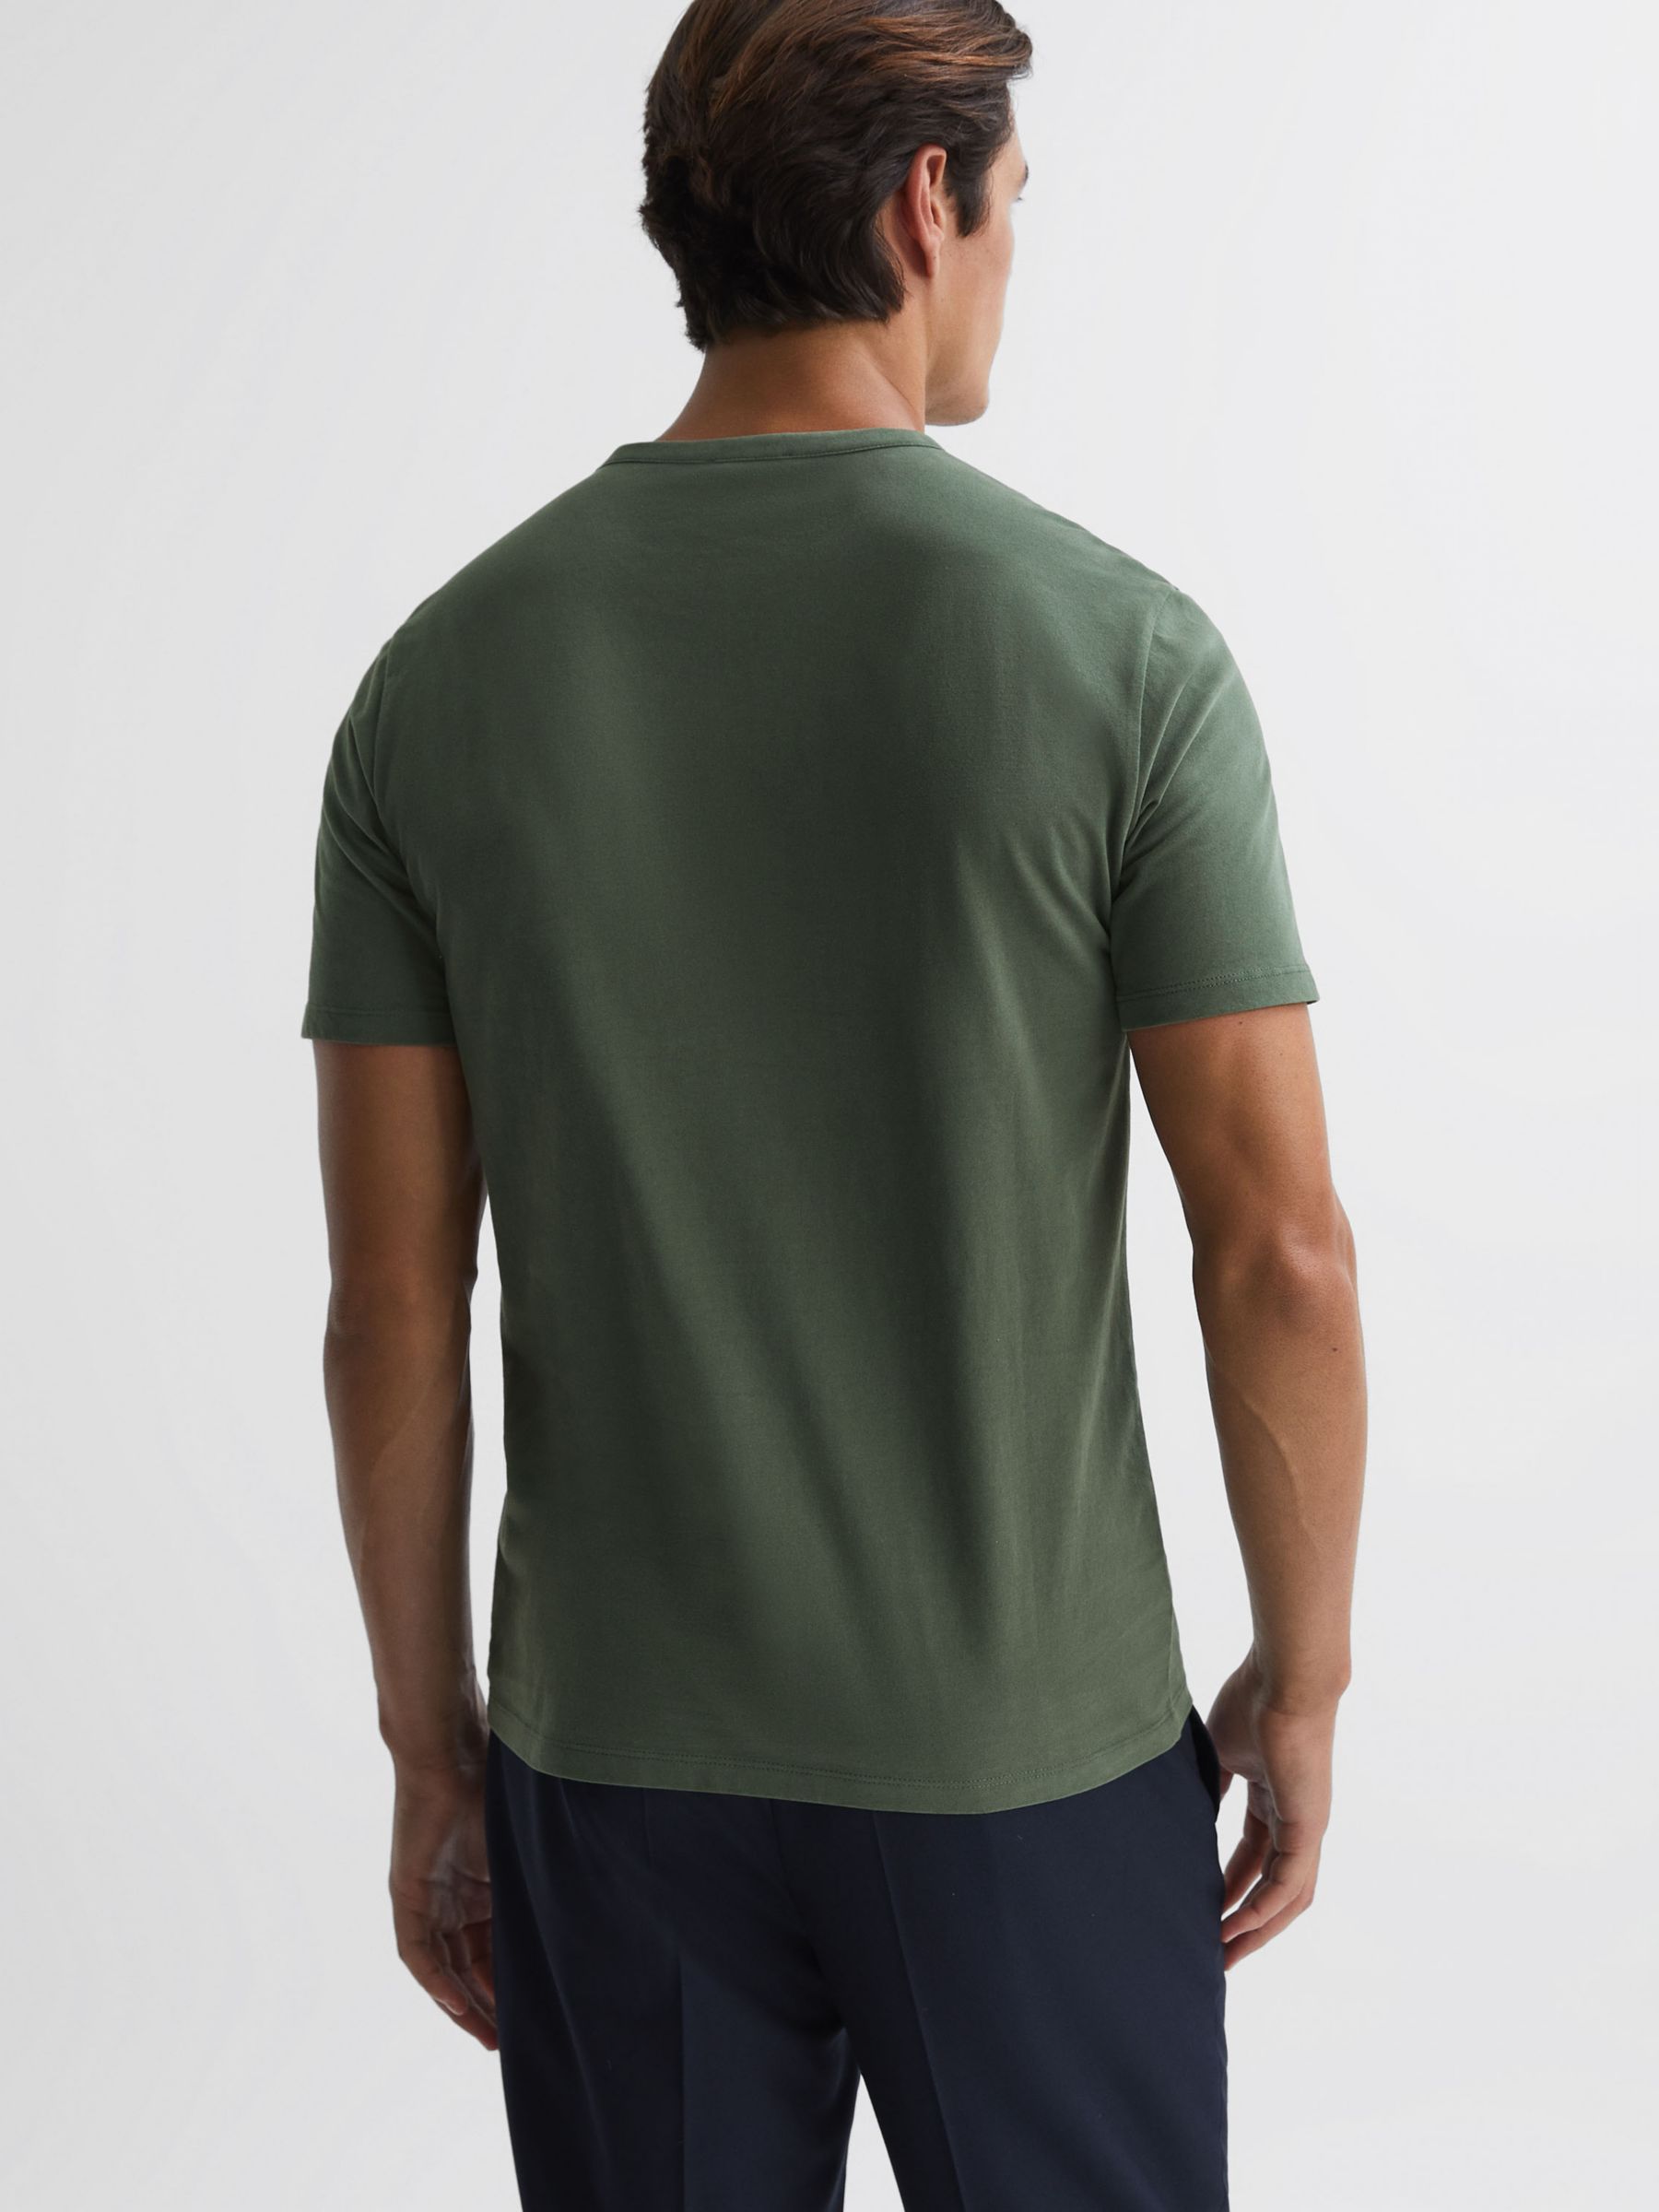 Reiss Melrose Cotton Crew Neck T-Shirt, Ivy Green at John Lewis & Partners